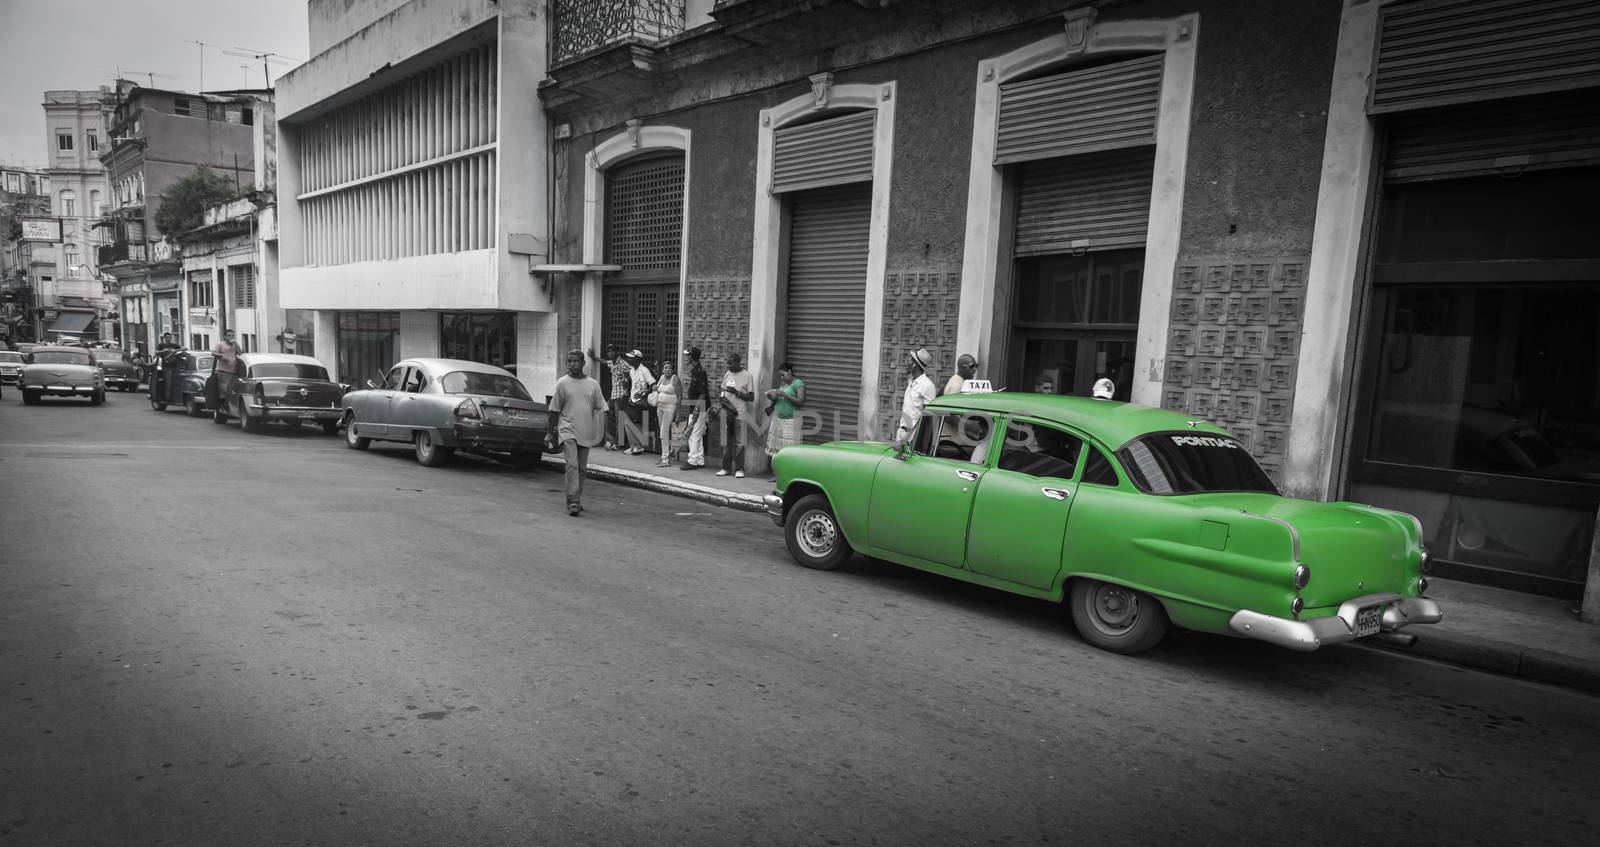 Havana street scene in monochrome old dilapidated buildings, people walking and bright green American classic Pontiac car.